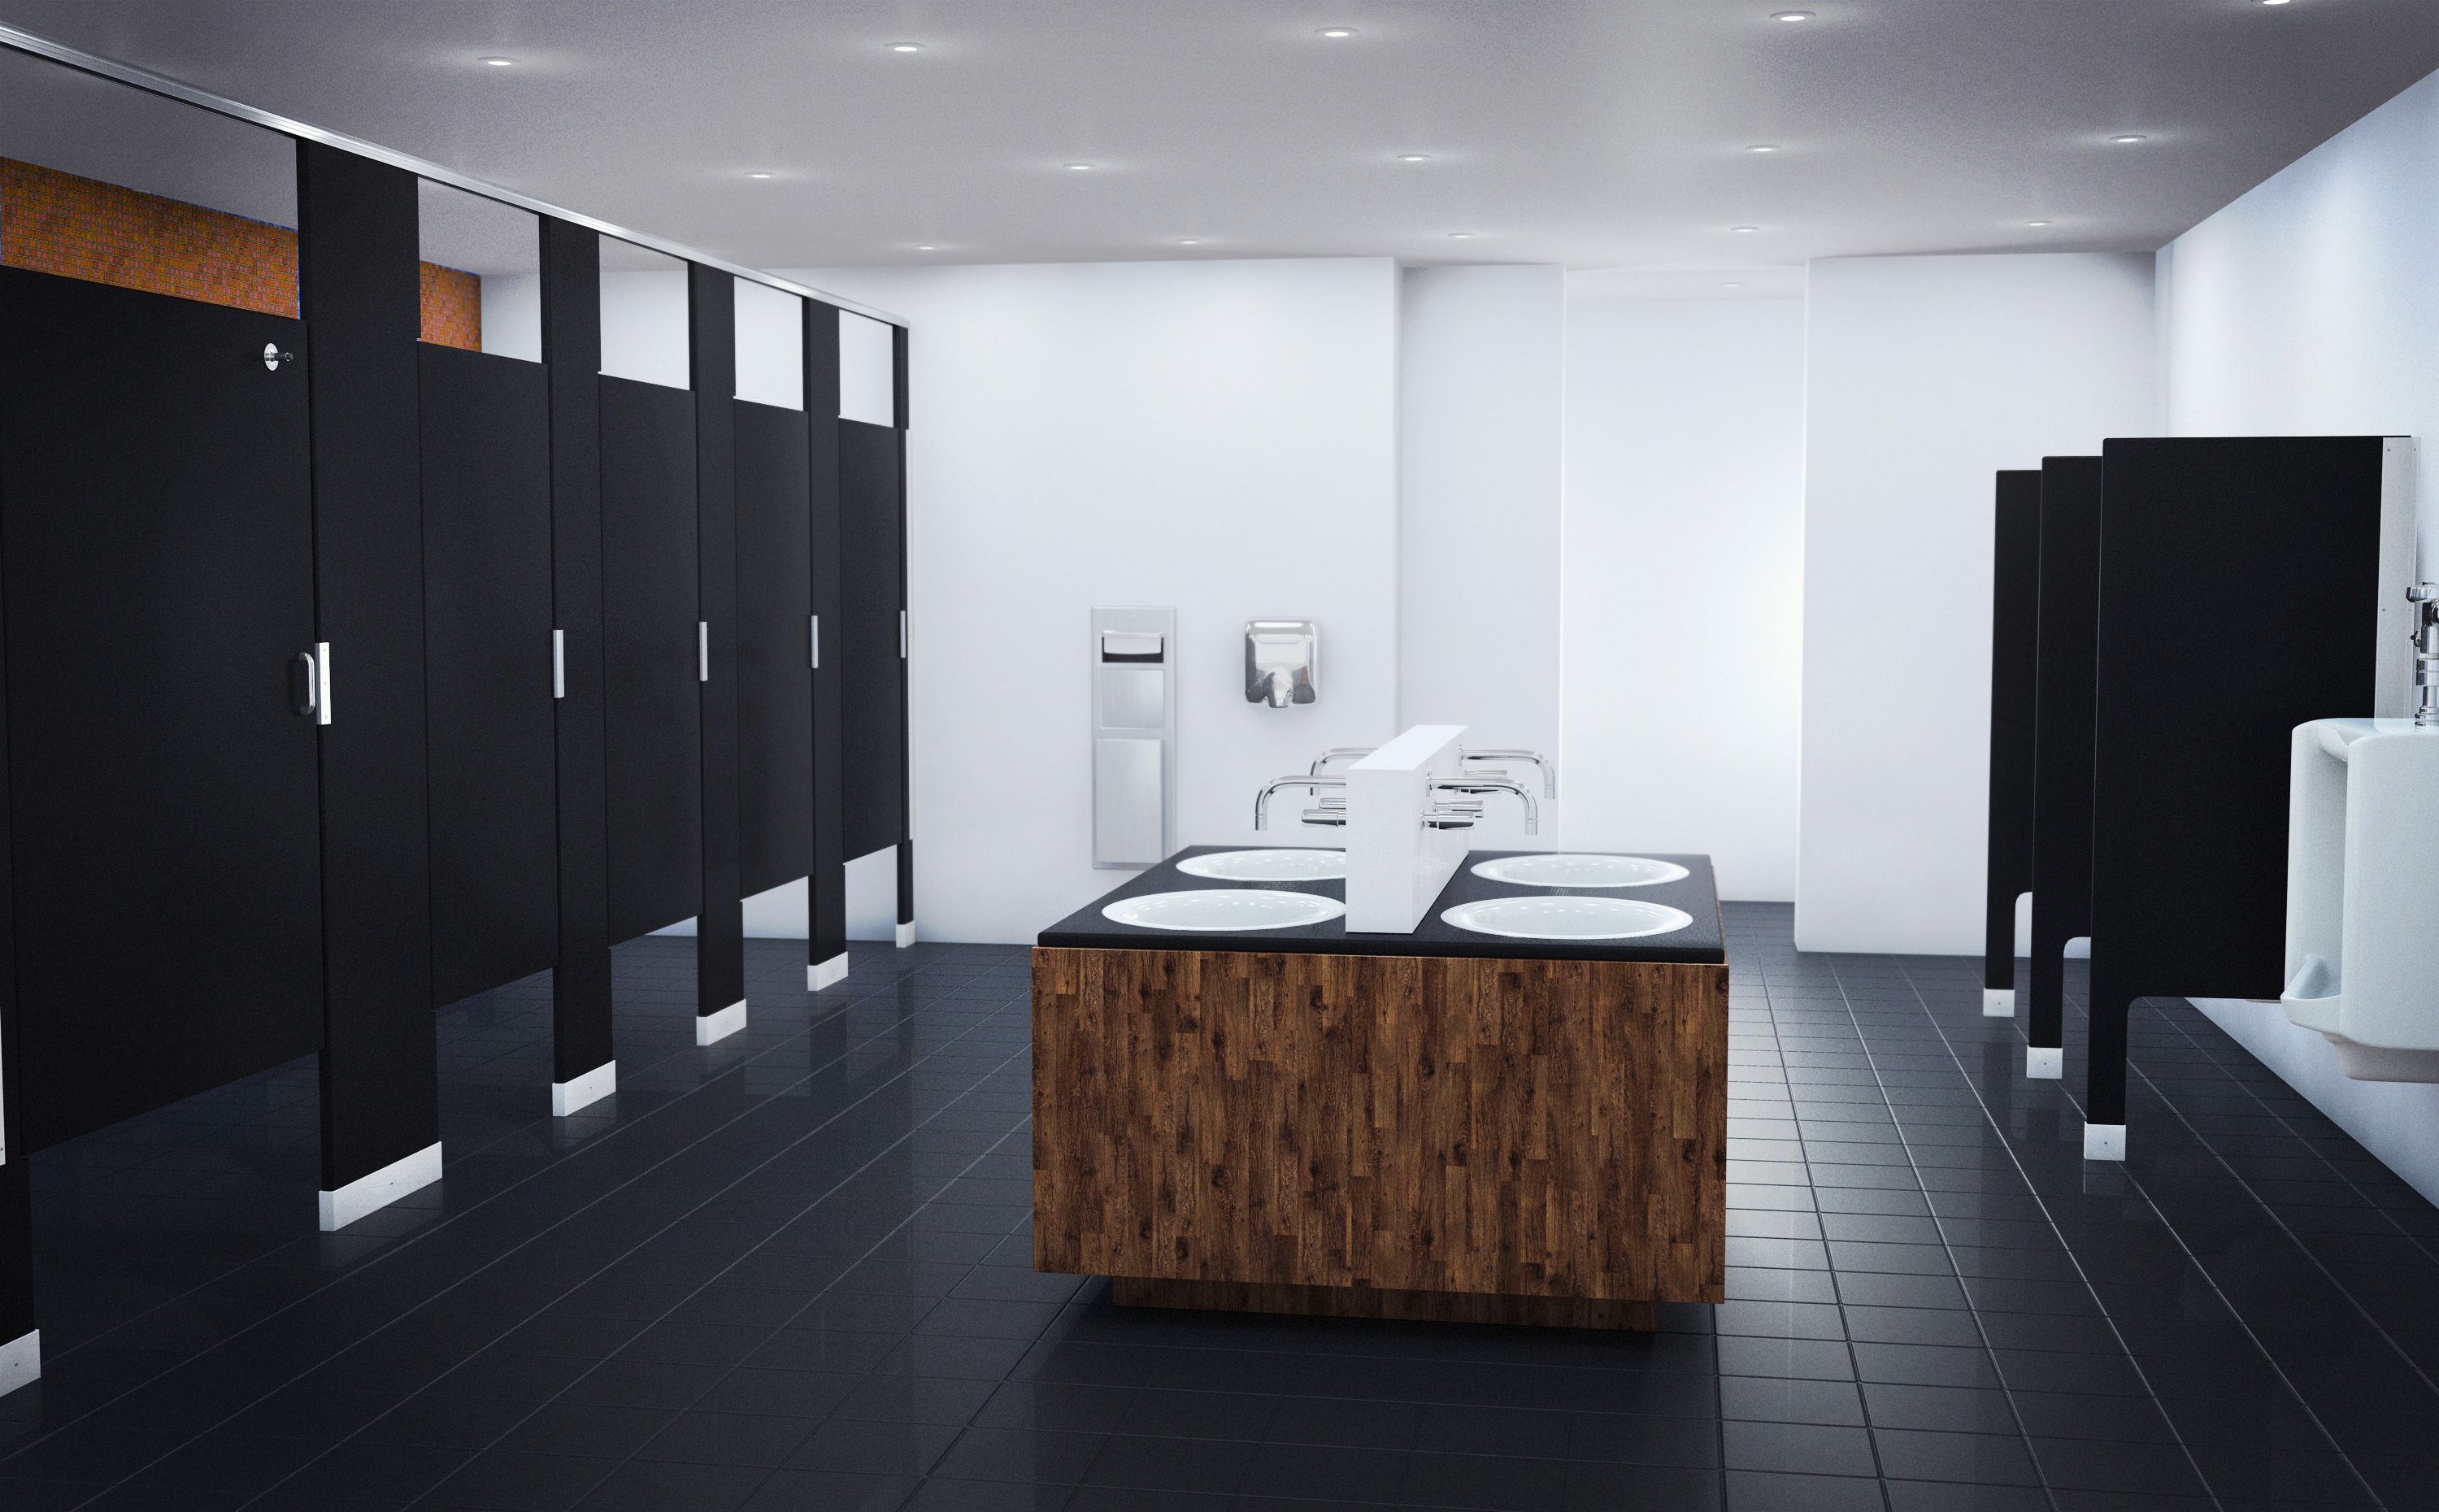 New Trends in Commercial Restroom Design - Photo Of Black Stalls